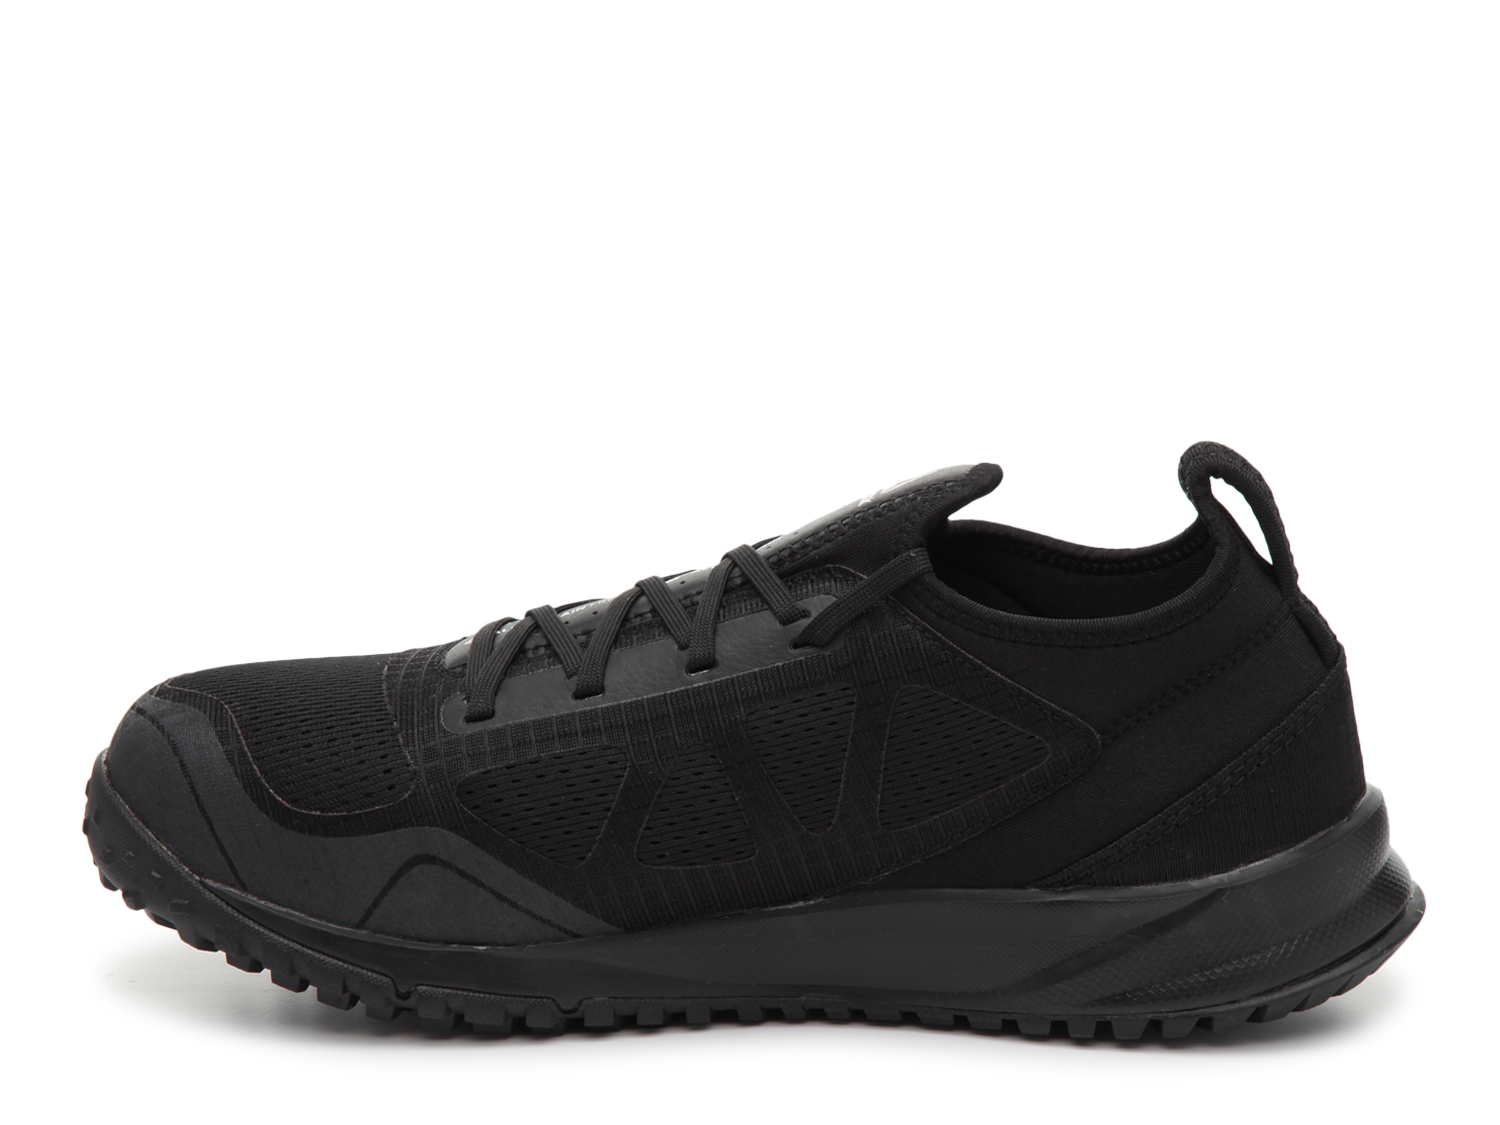 Men's Steel Toe RB4090 All Terrain EH Black Athletic Work Shoes Reebok Shoes